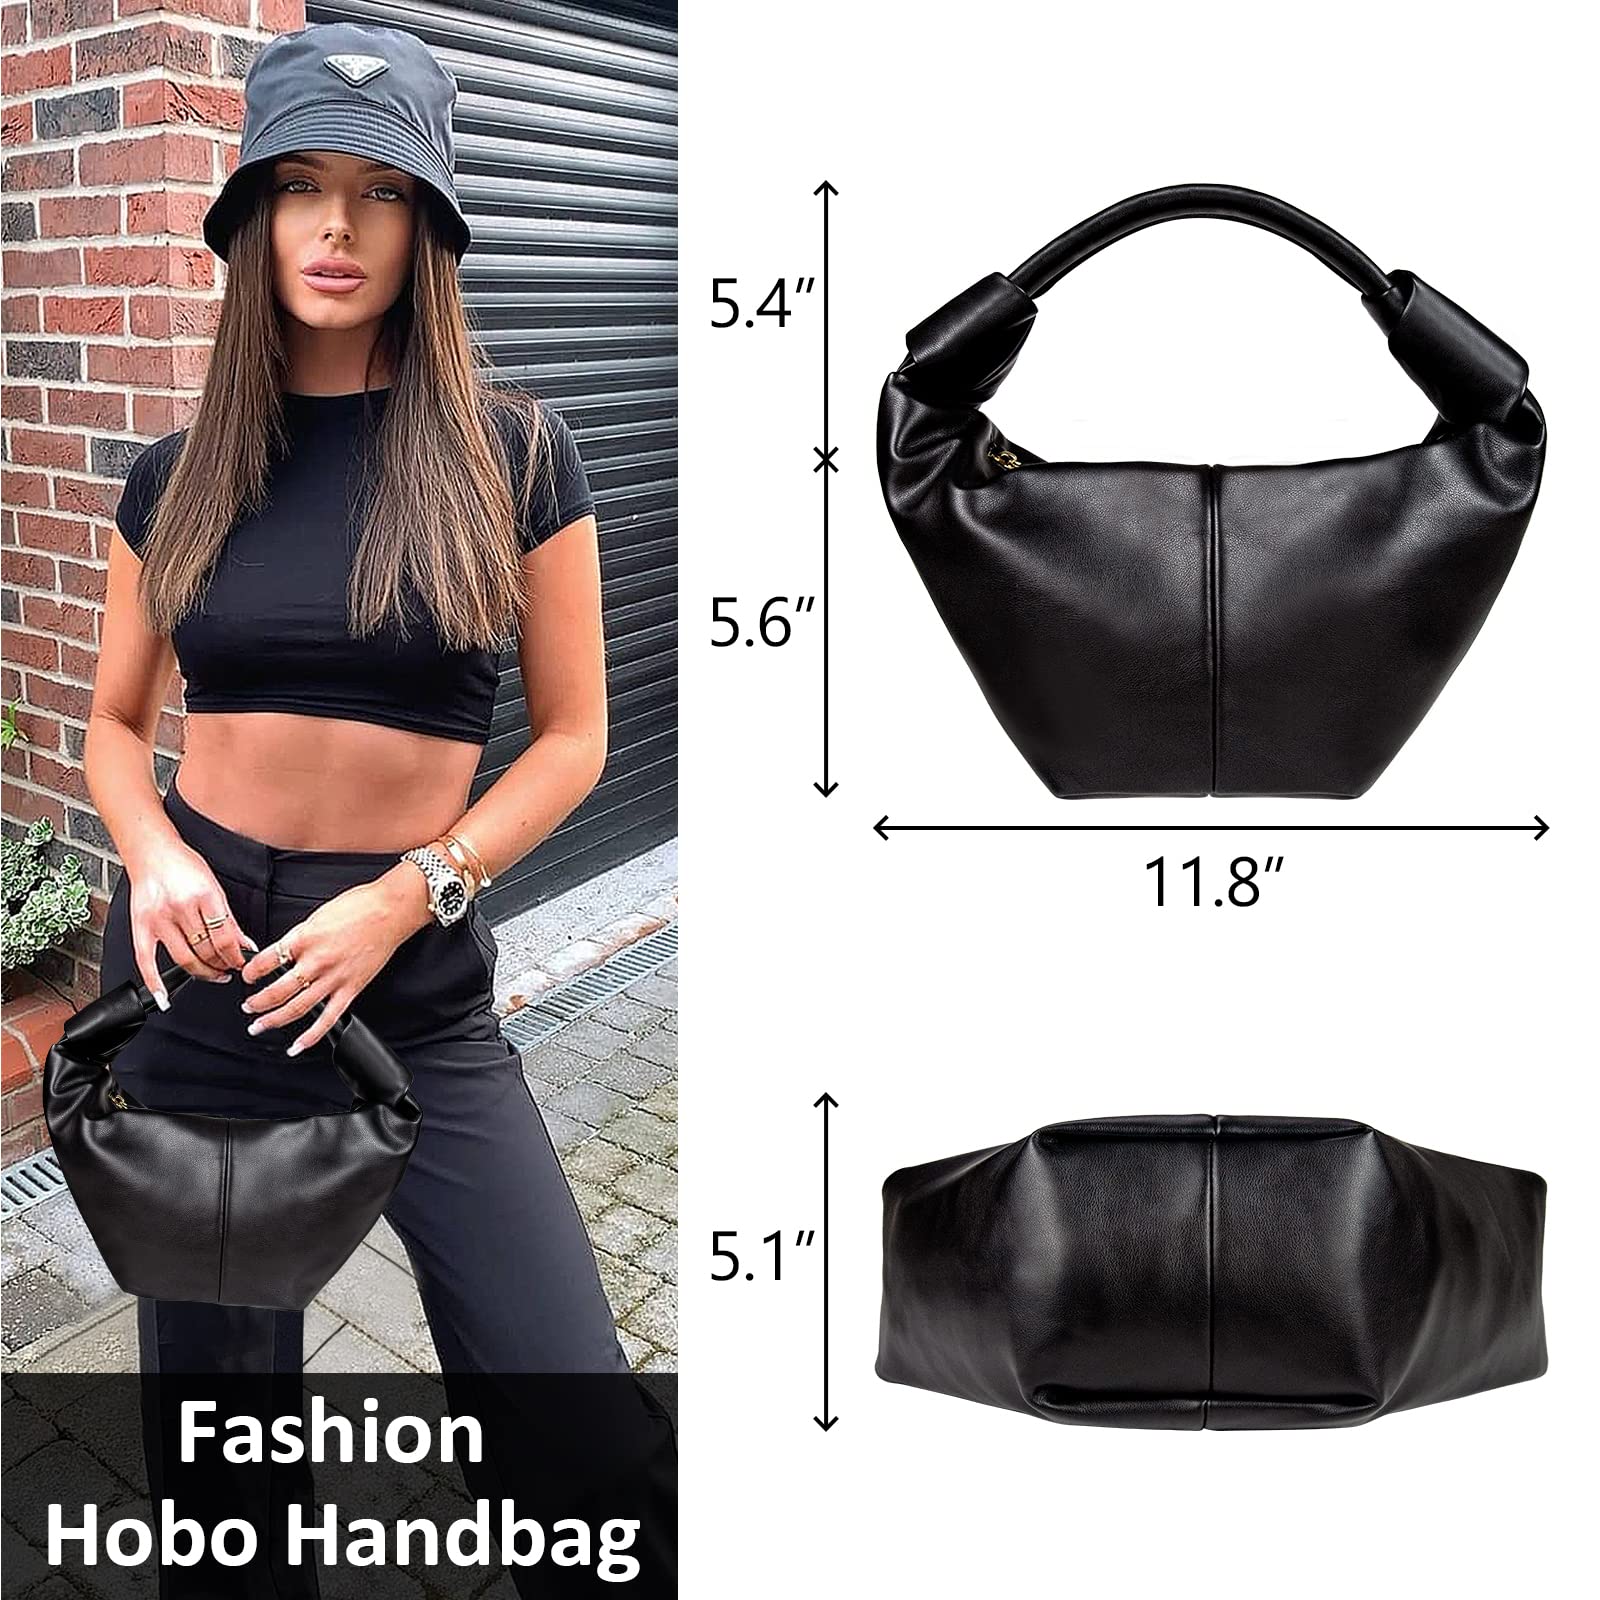 Strobody Women's Hobo Handbag and Purse, Soft Leather Shoulder Bag Satchel Clutch with Zipper Closure, Fashion Retro Designer Top Handle Bag for Work,Travel,Shopping